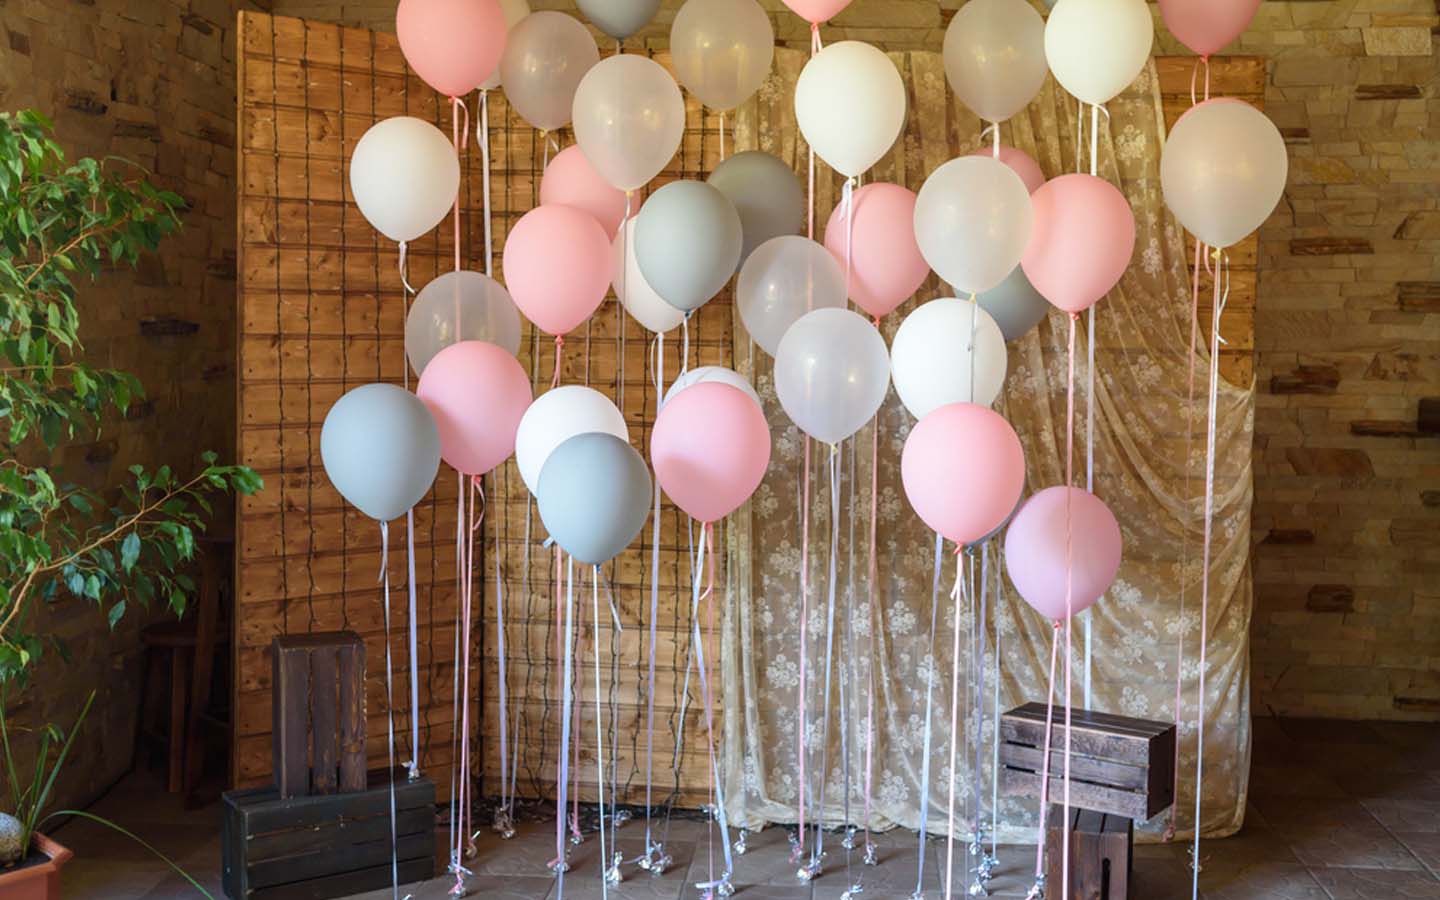 ballons go best with birthdays. birthday decoration ideas